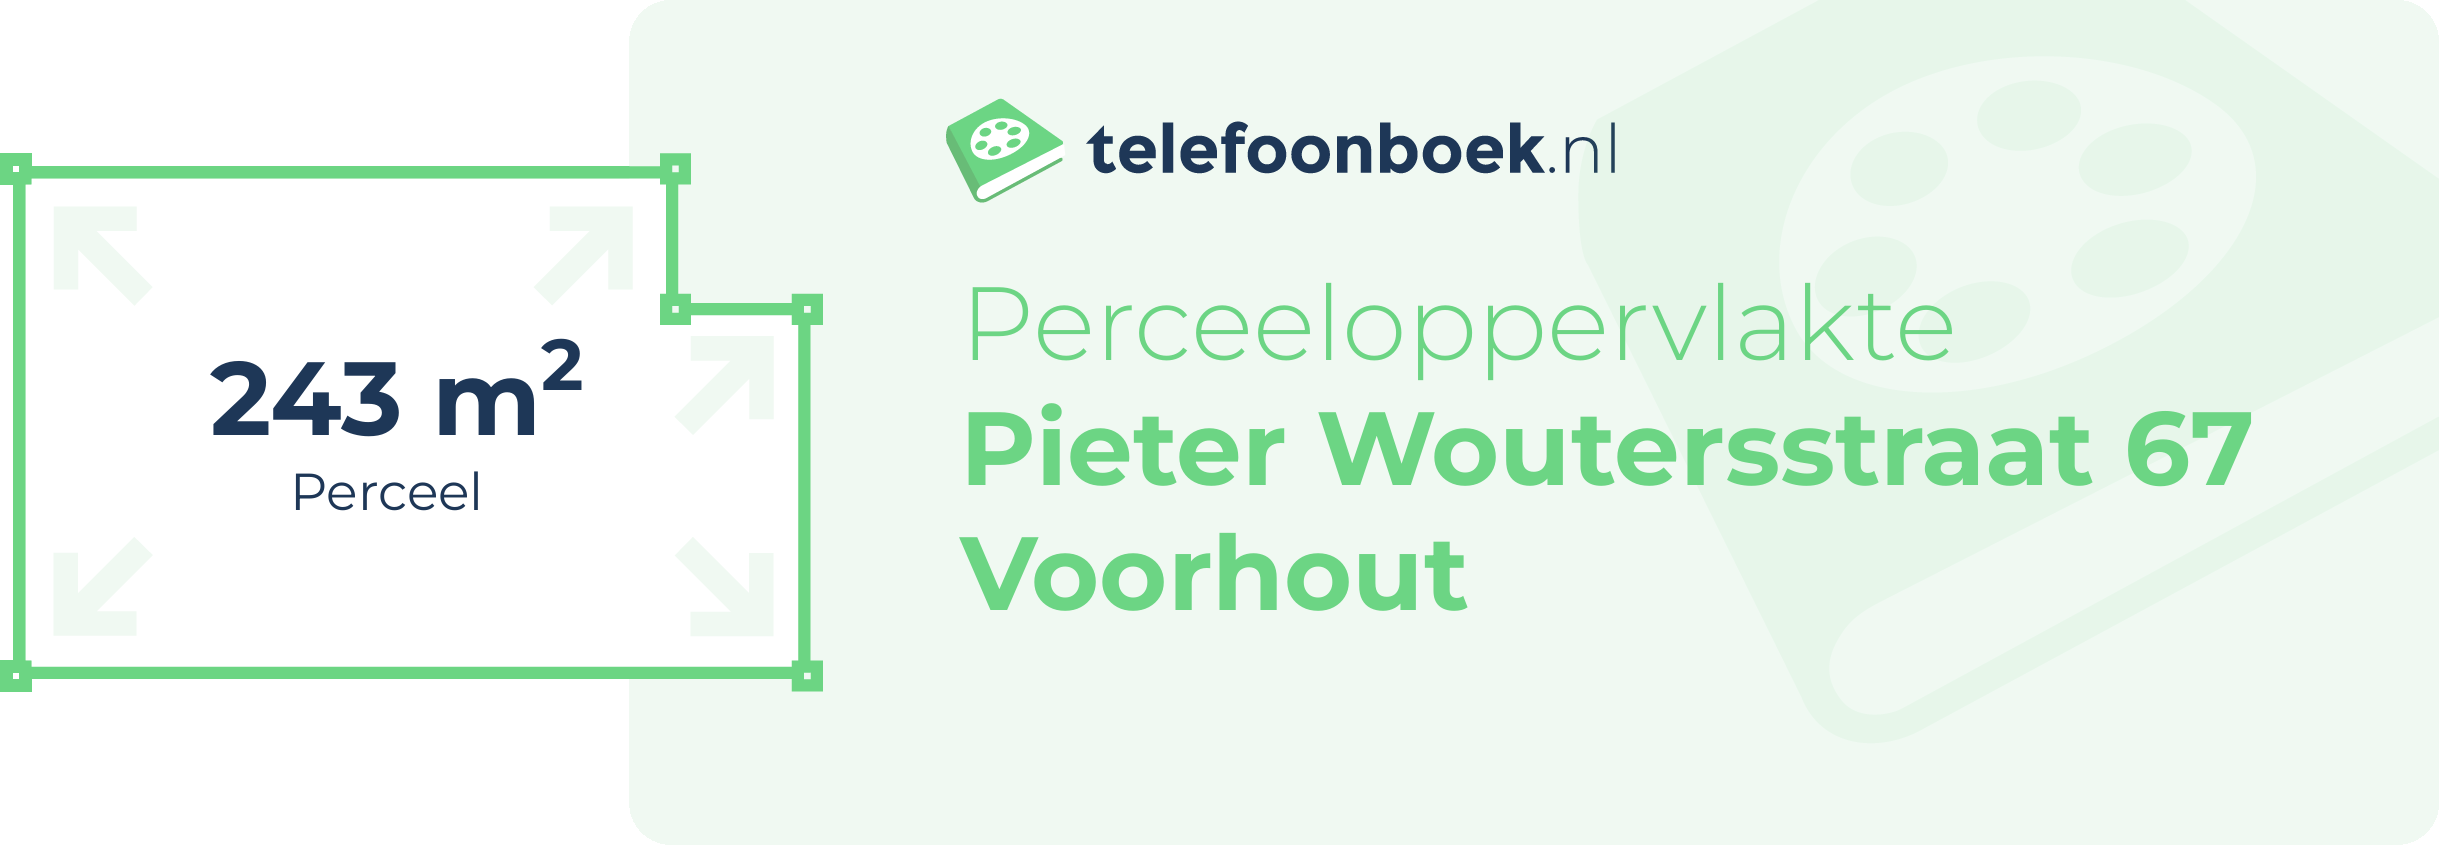 Perceeloppervlakte Pieter Woutersstraat 67 Voorhout